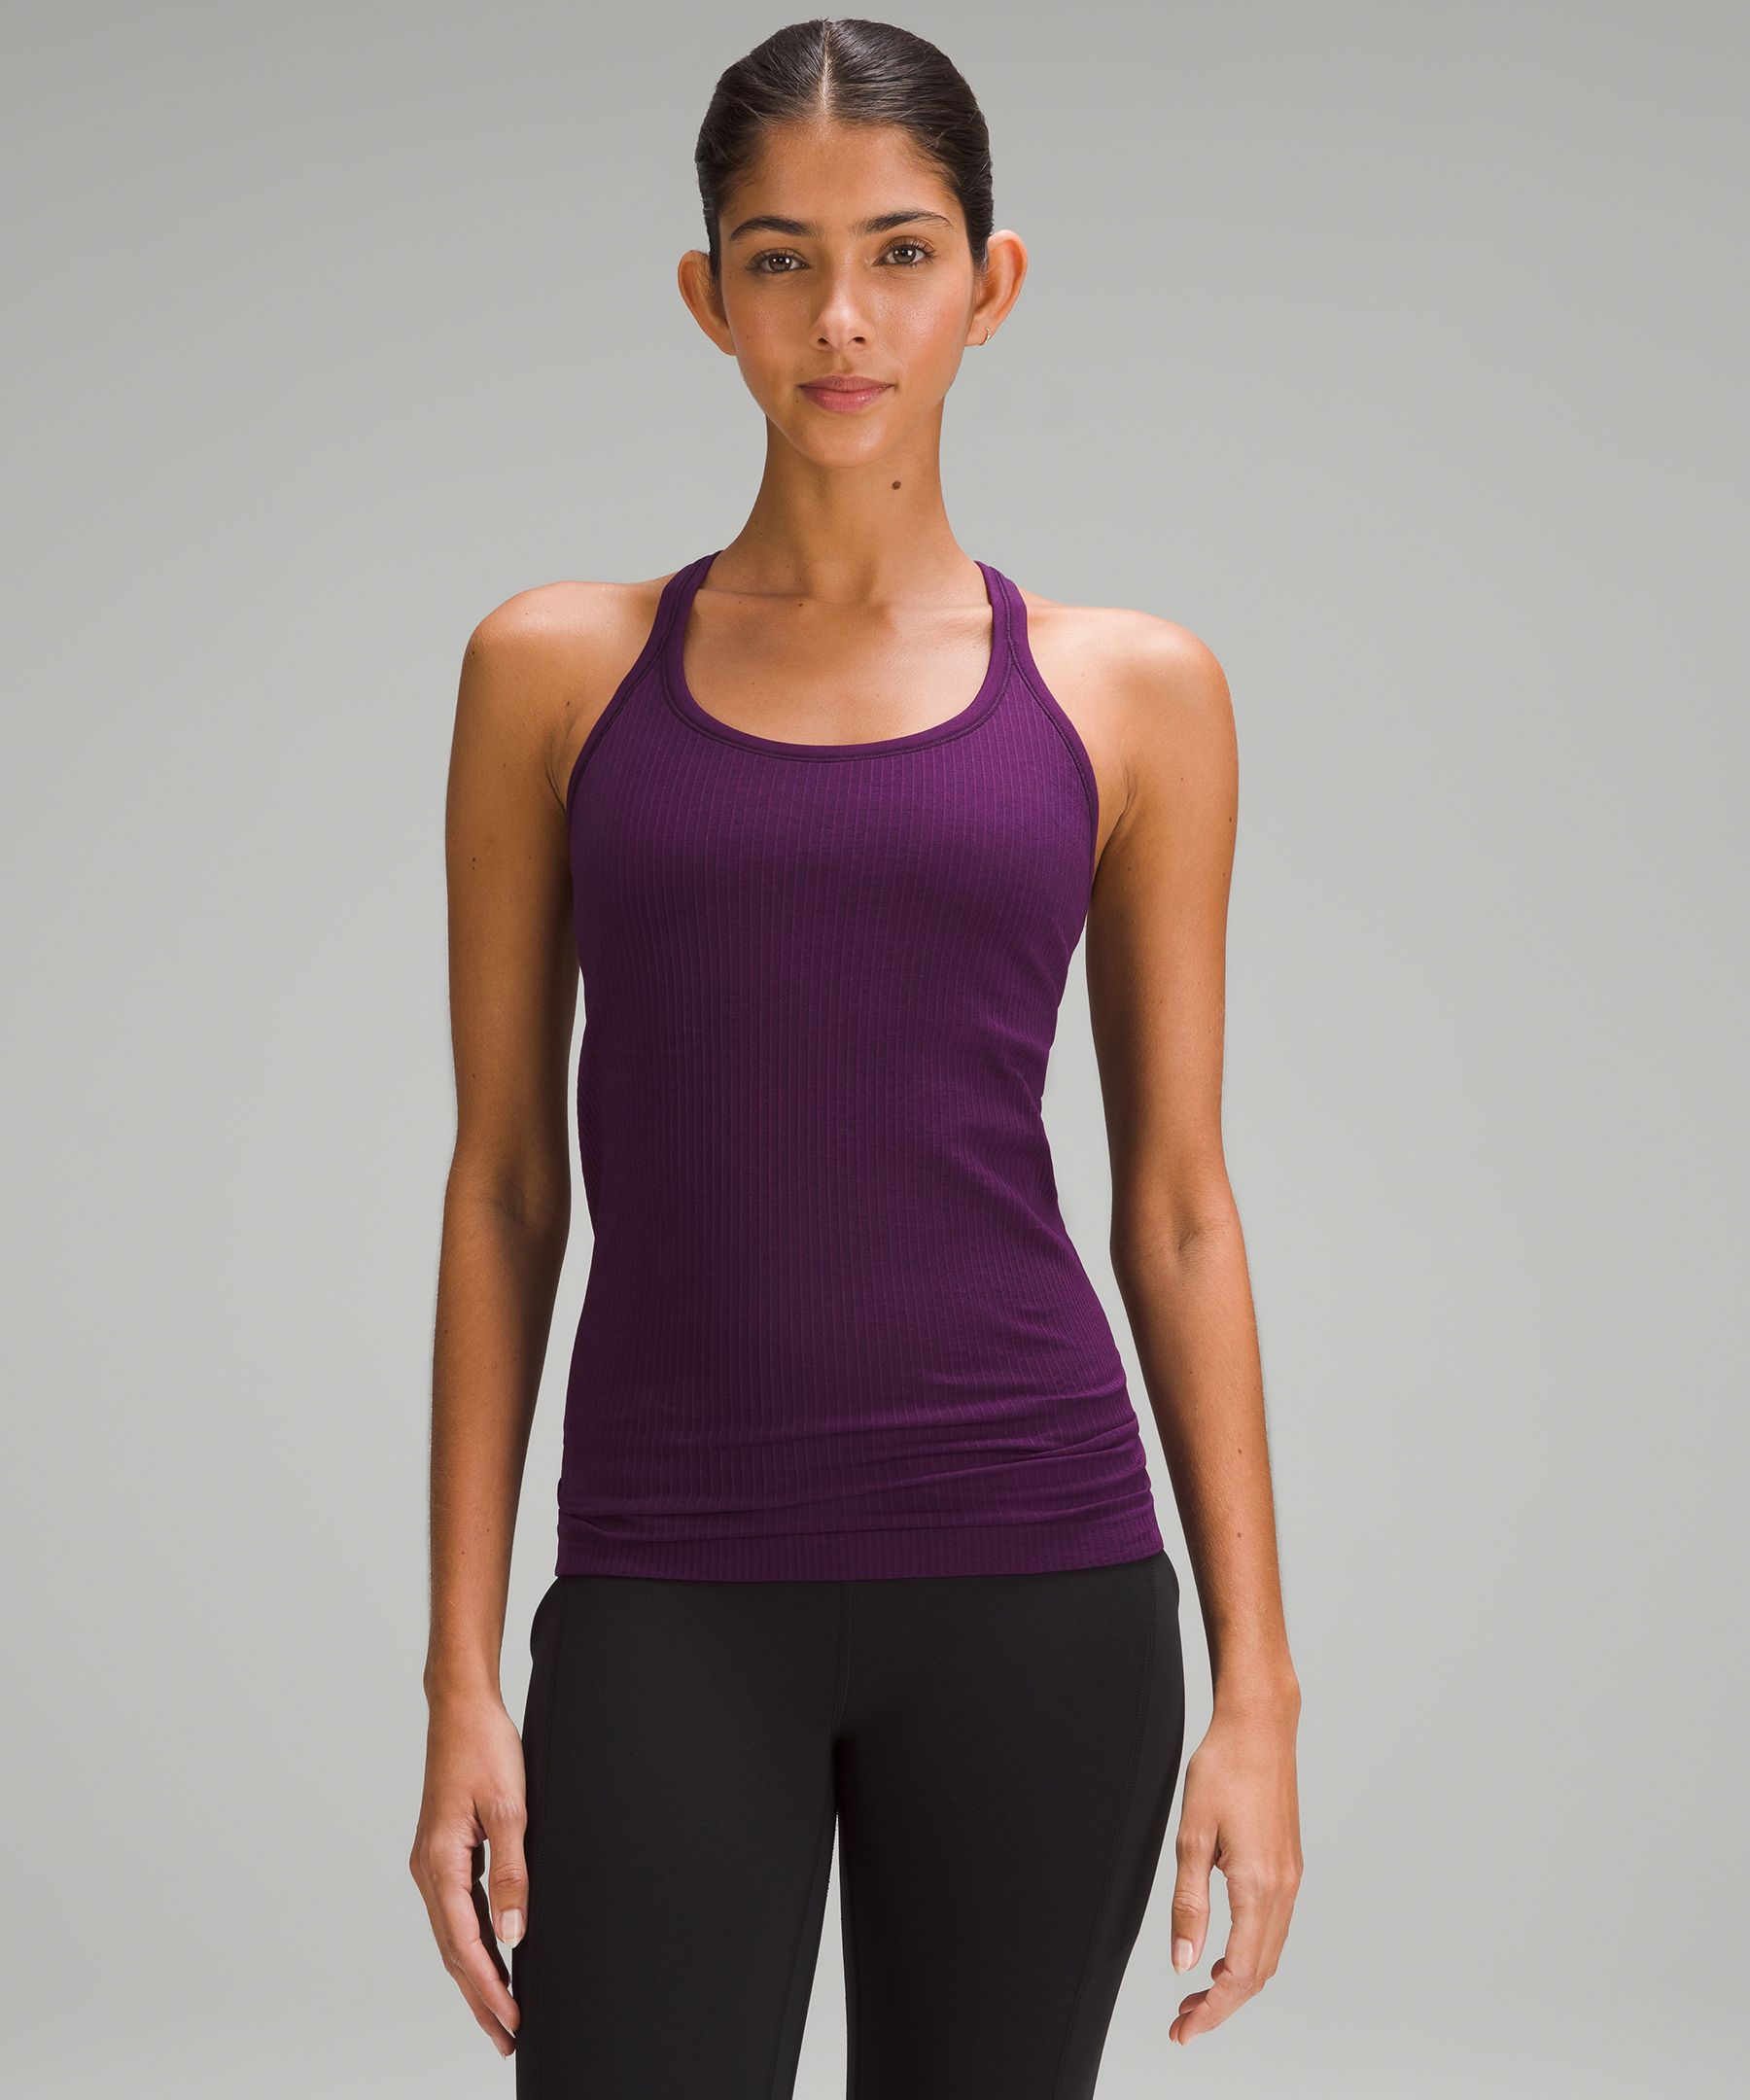 Lululemon Yoga Ebb to Street Tank Top - Purple - Size 4